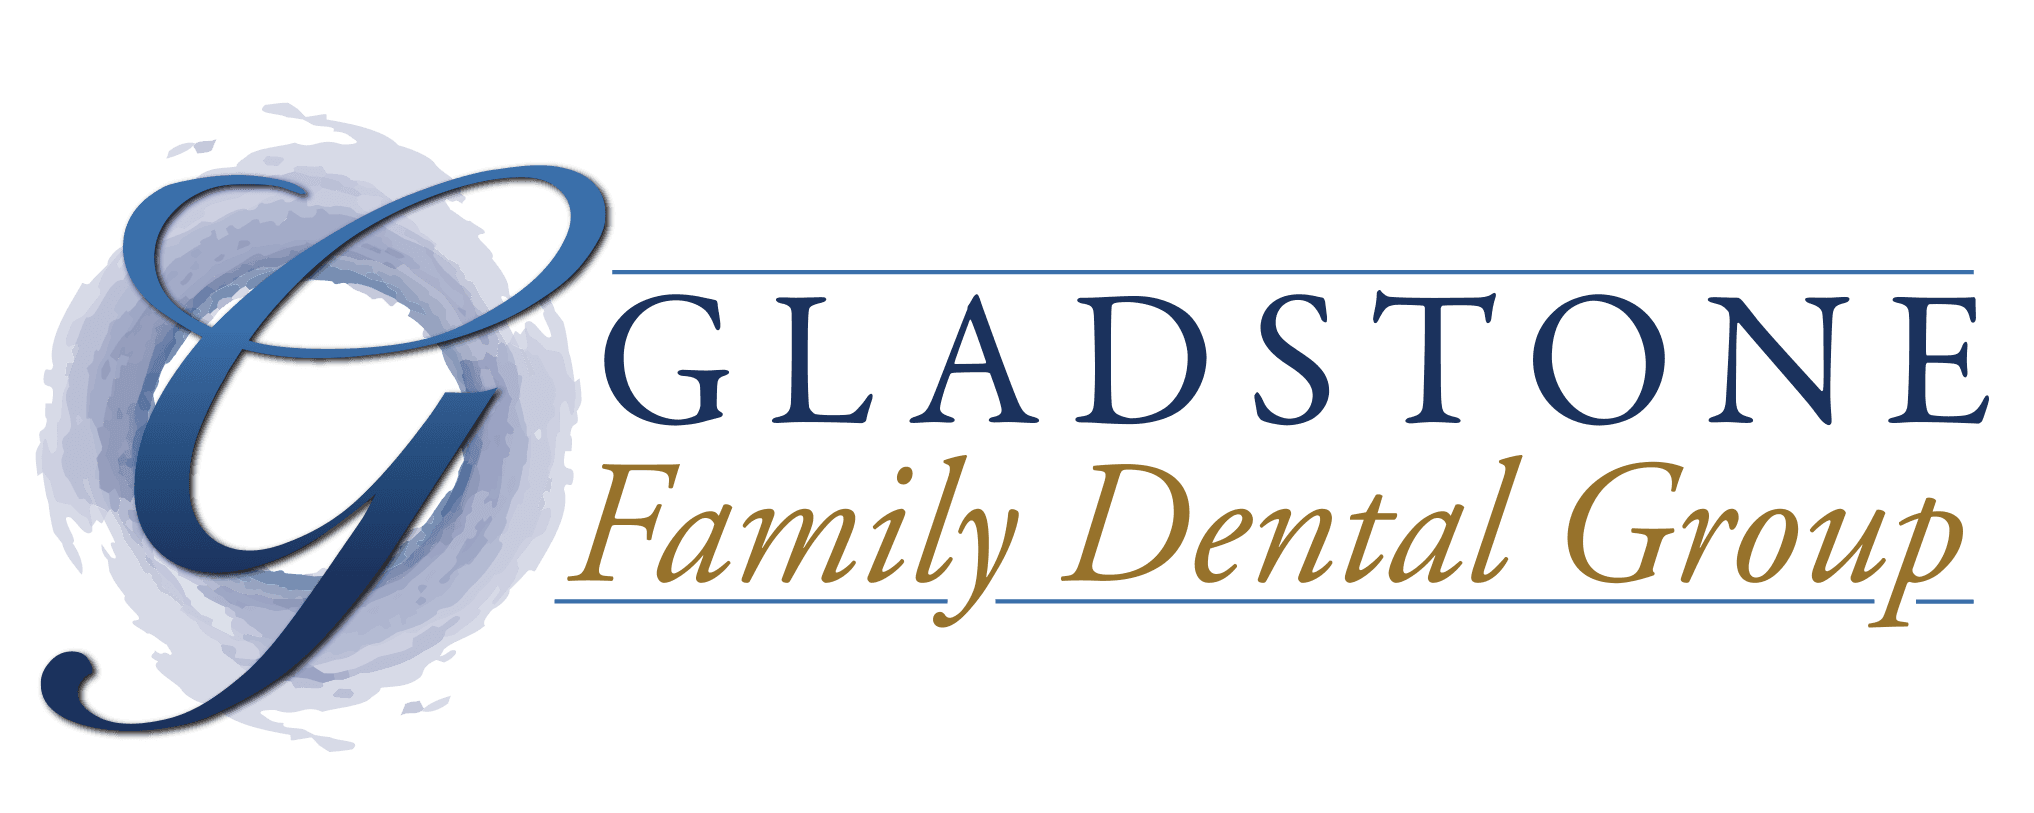 Visit Gladstone Family Dental Group